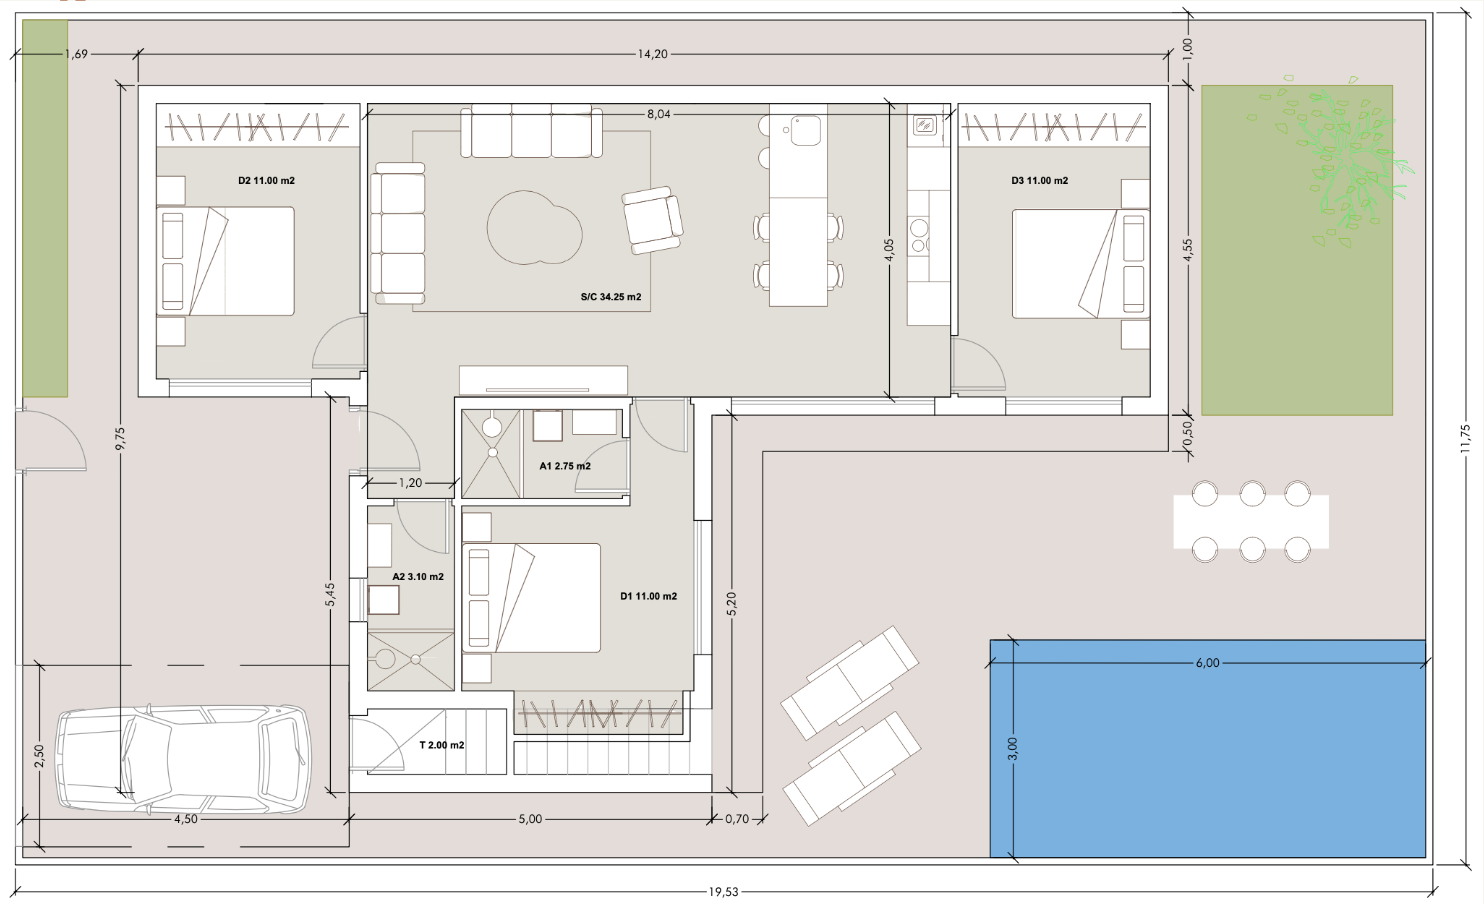 Floor plan for Villa ref 4058 for sale in ROLDAN Spain - Murcia Dreams